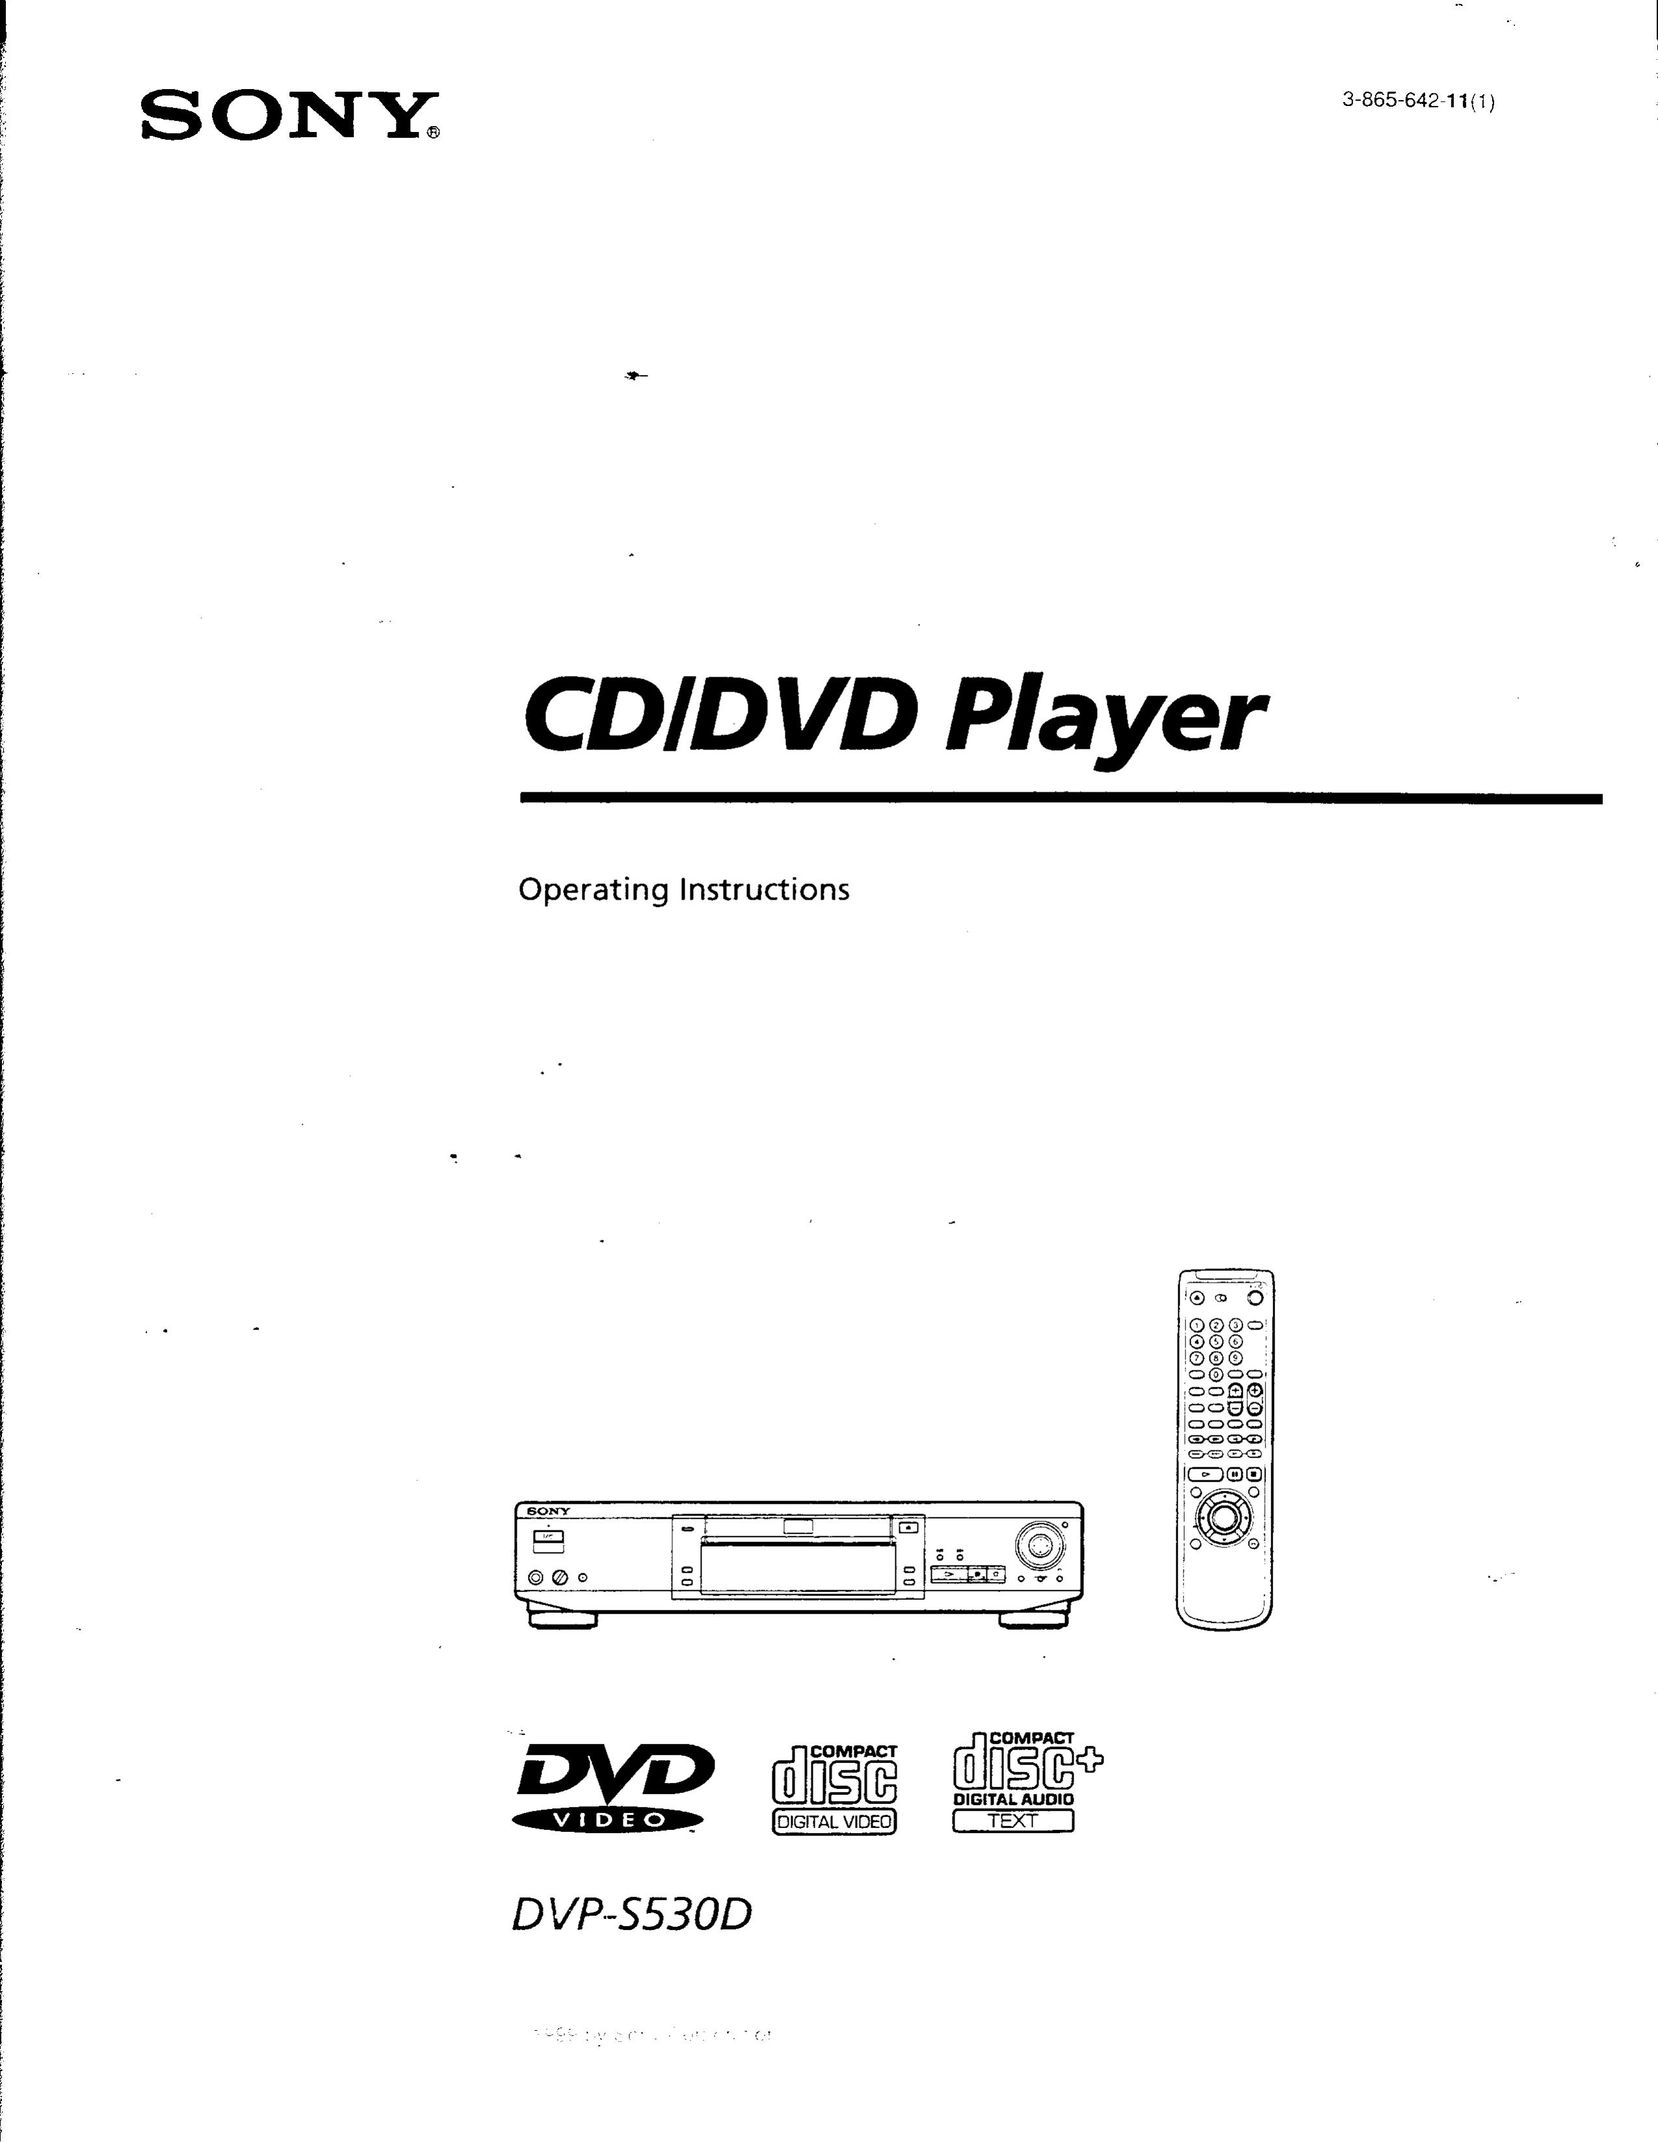 Sony 3-865-642-11(1) DVD Player User Manual